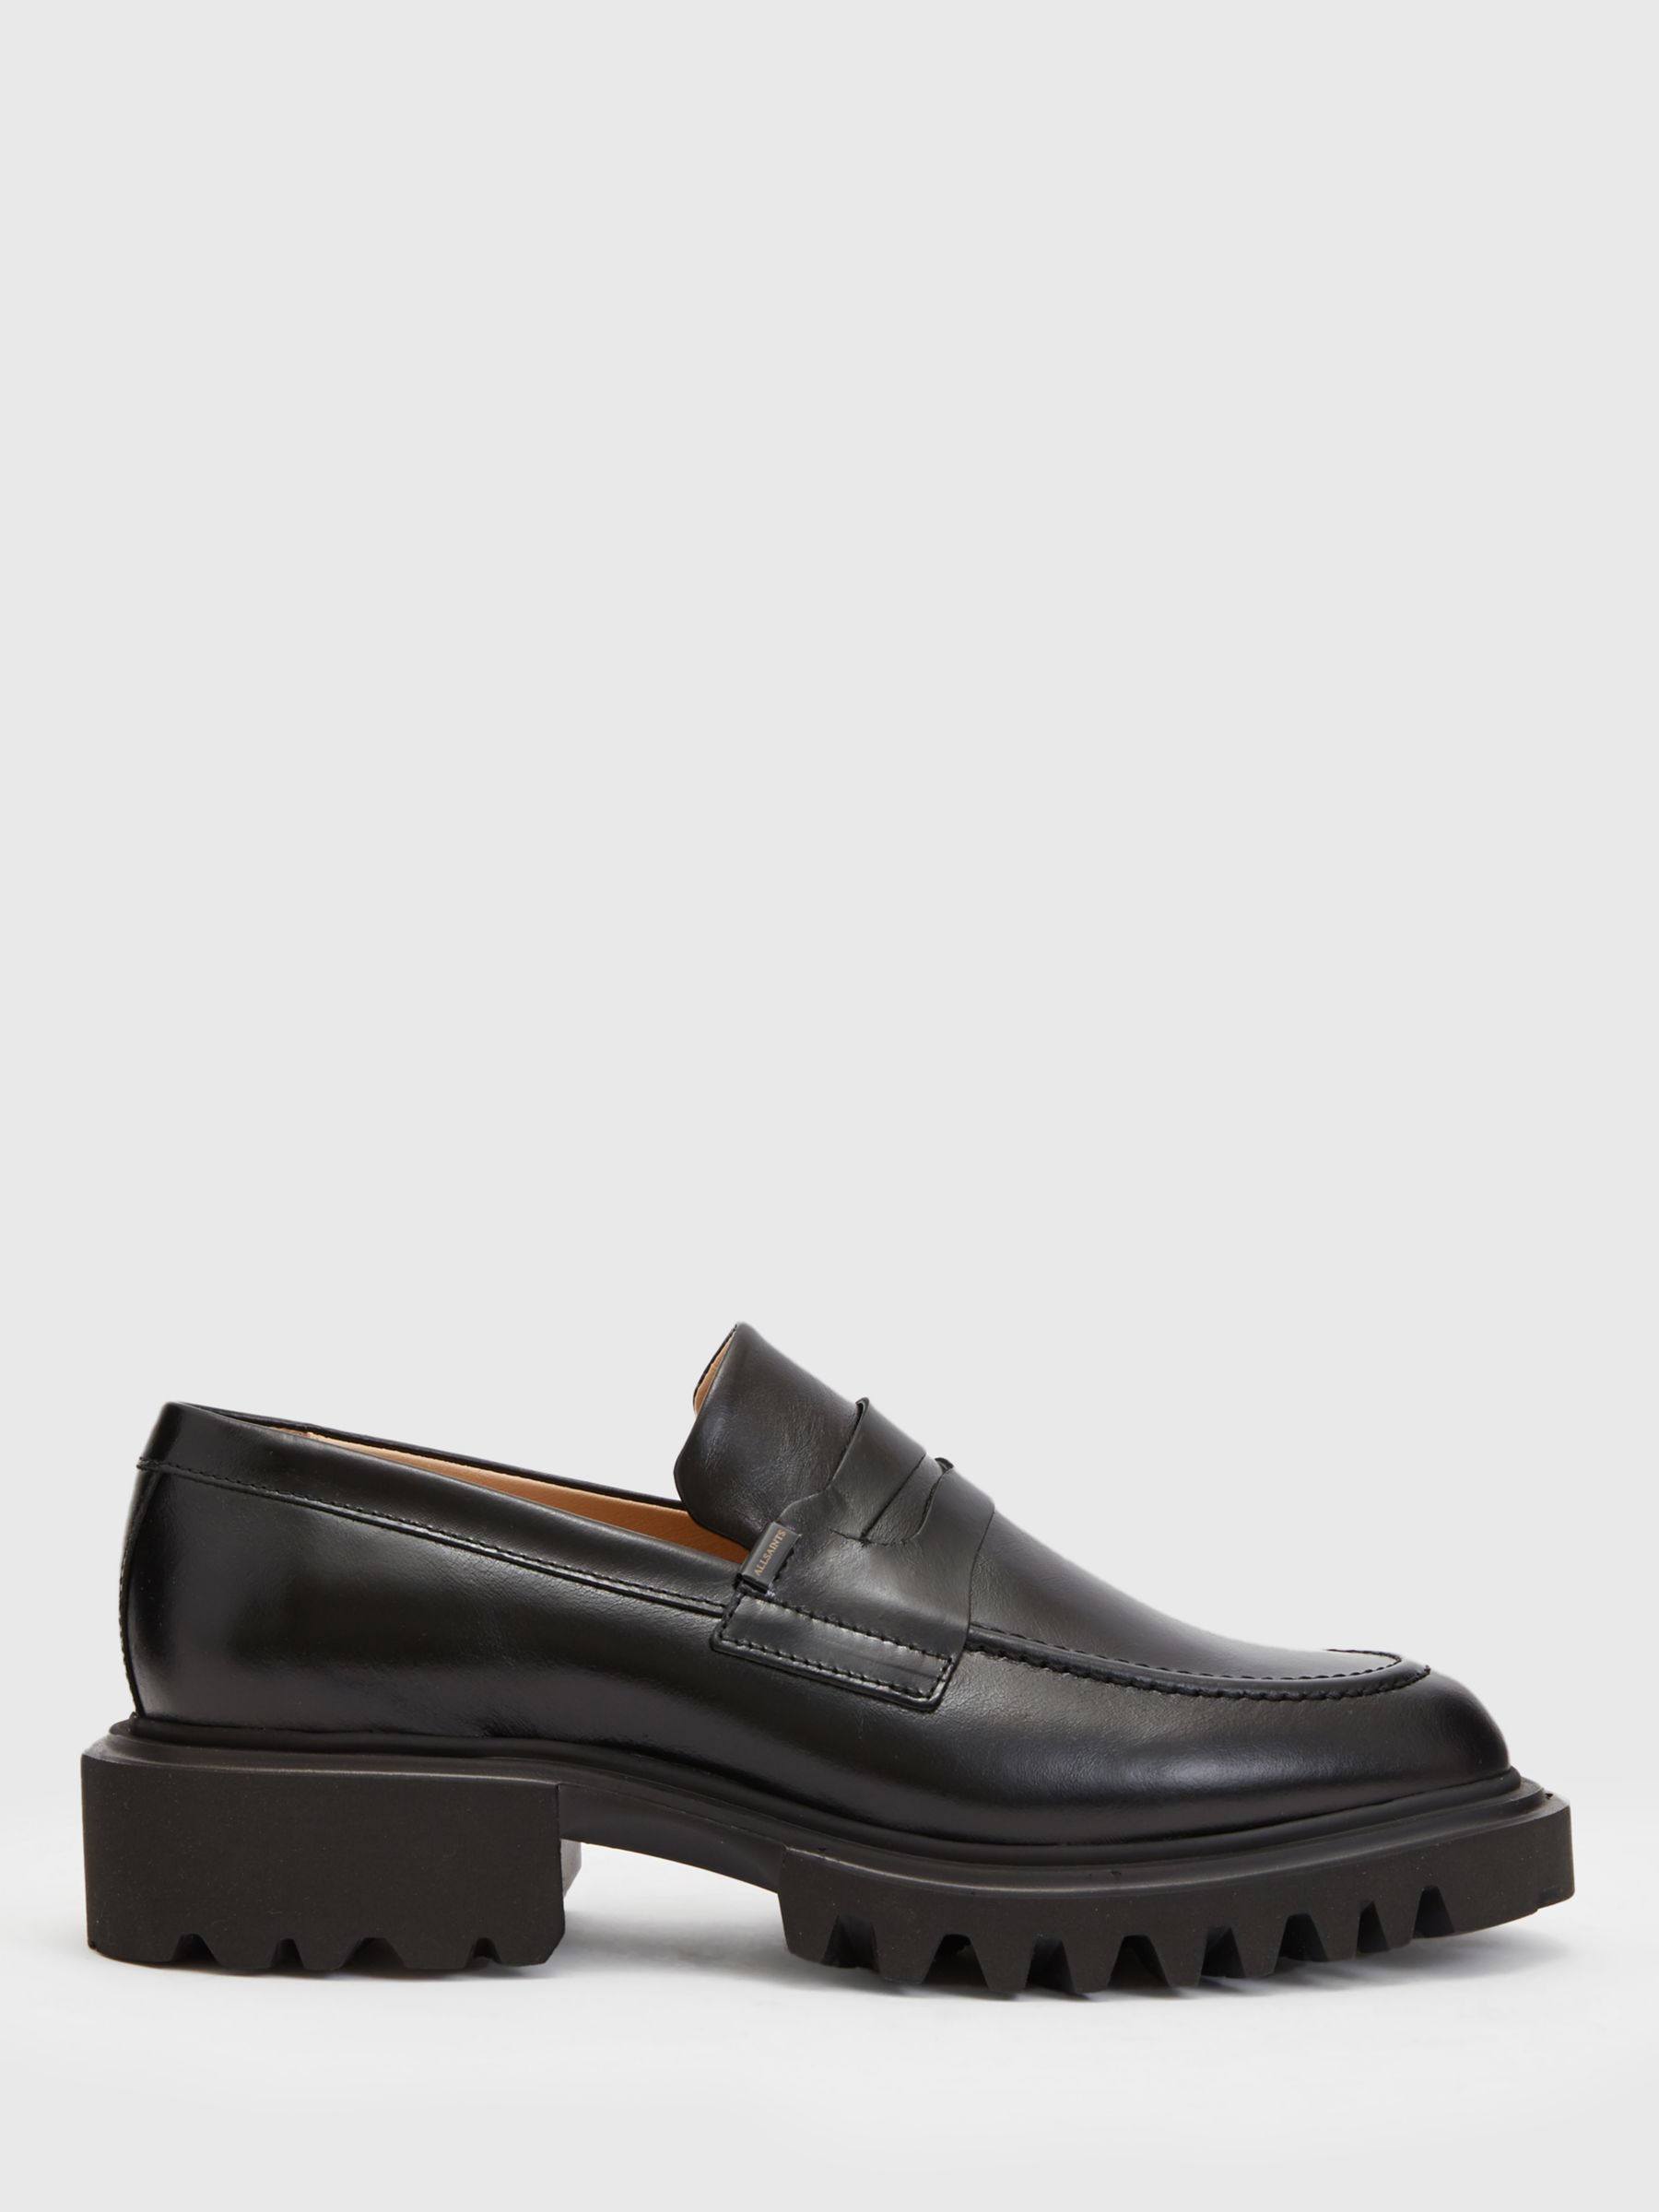 AllSaints Lola Leather Slip On Loafers, Black at John Lewis & Partners